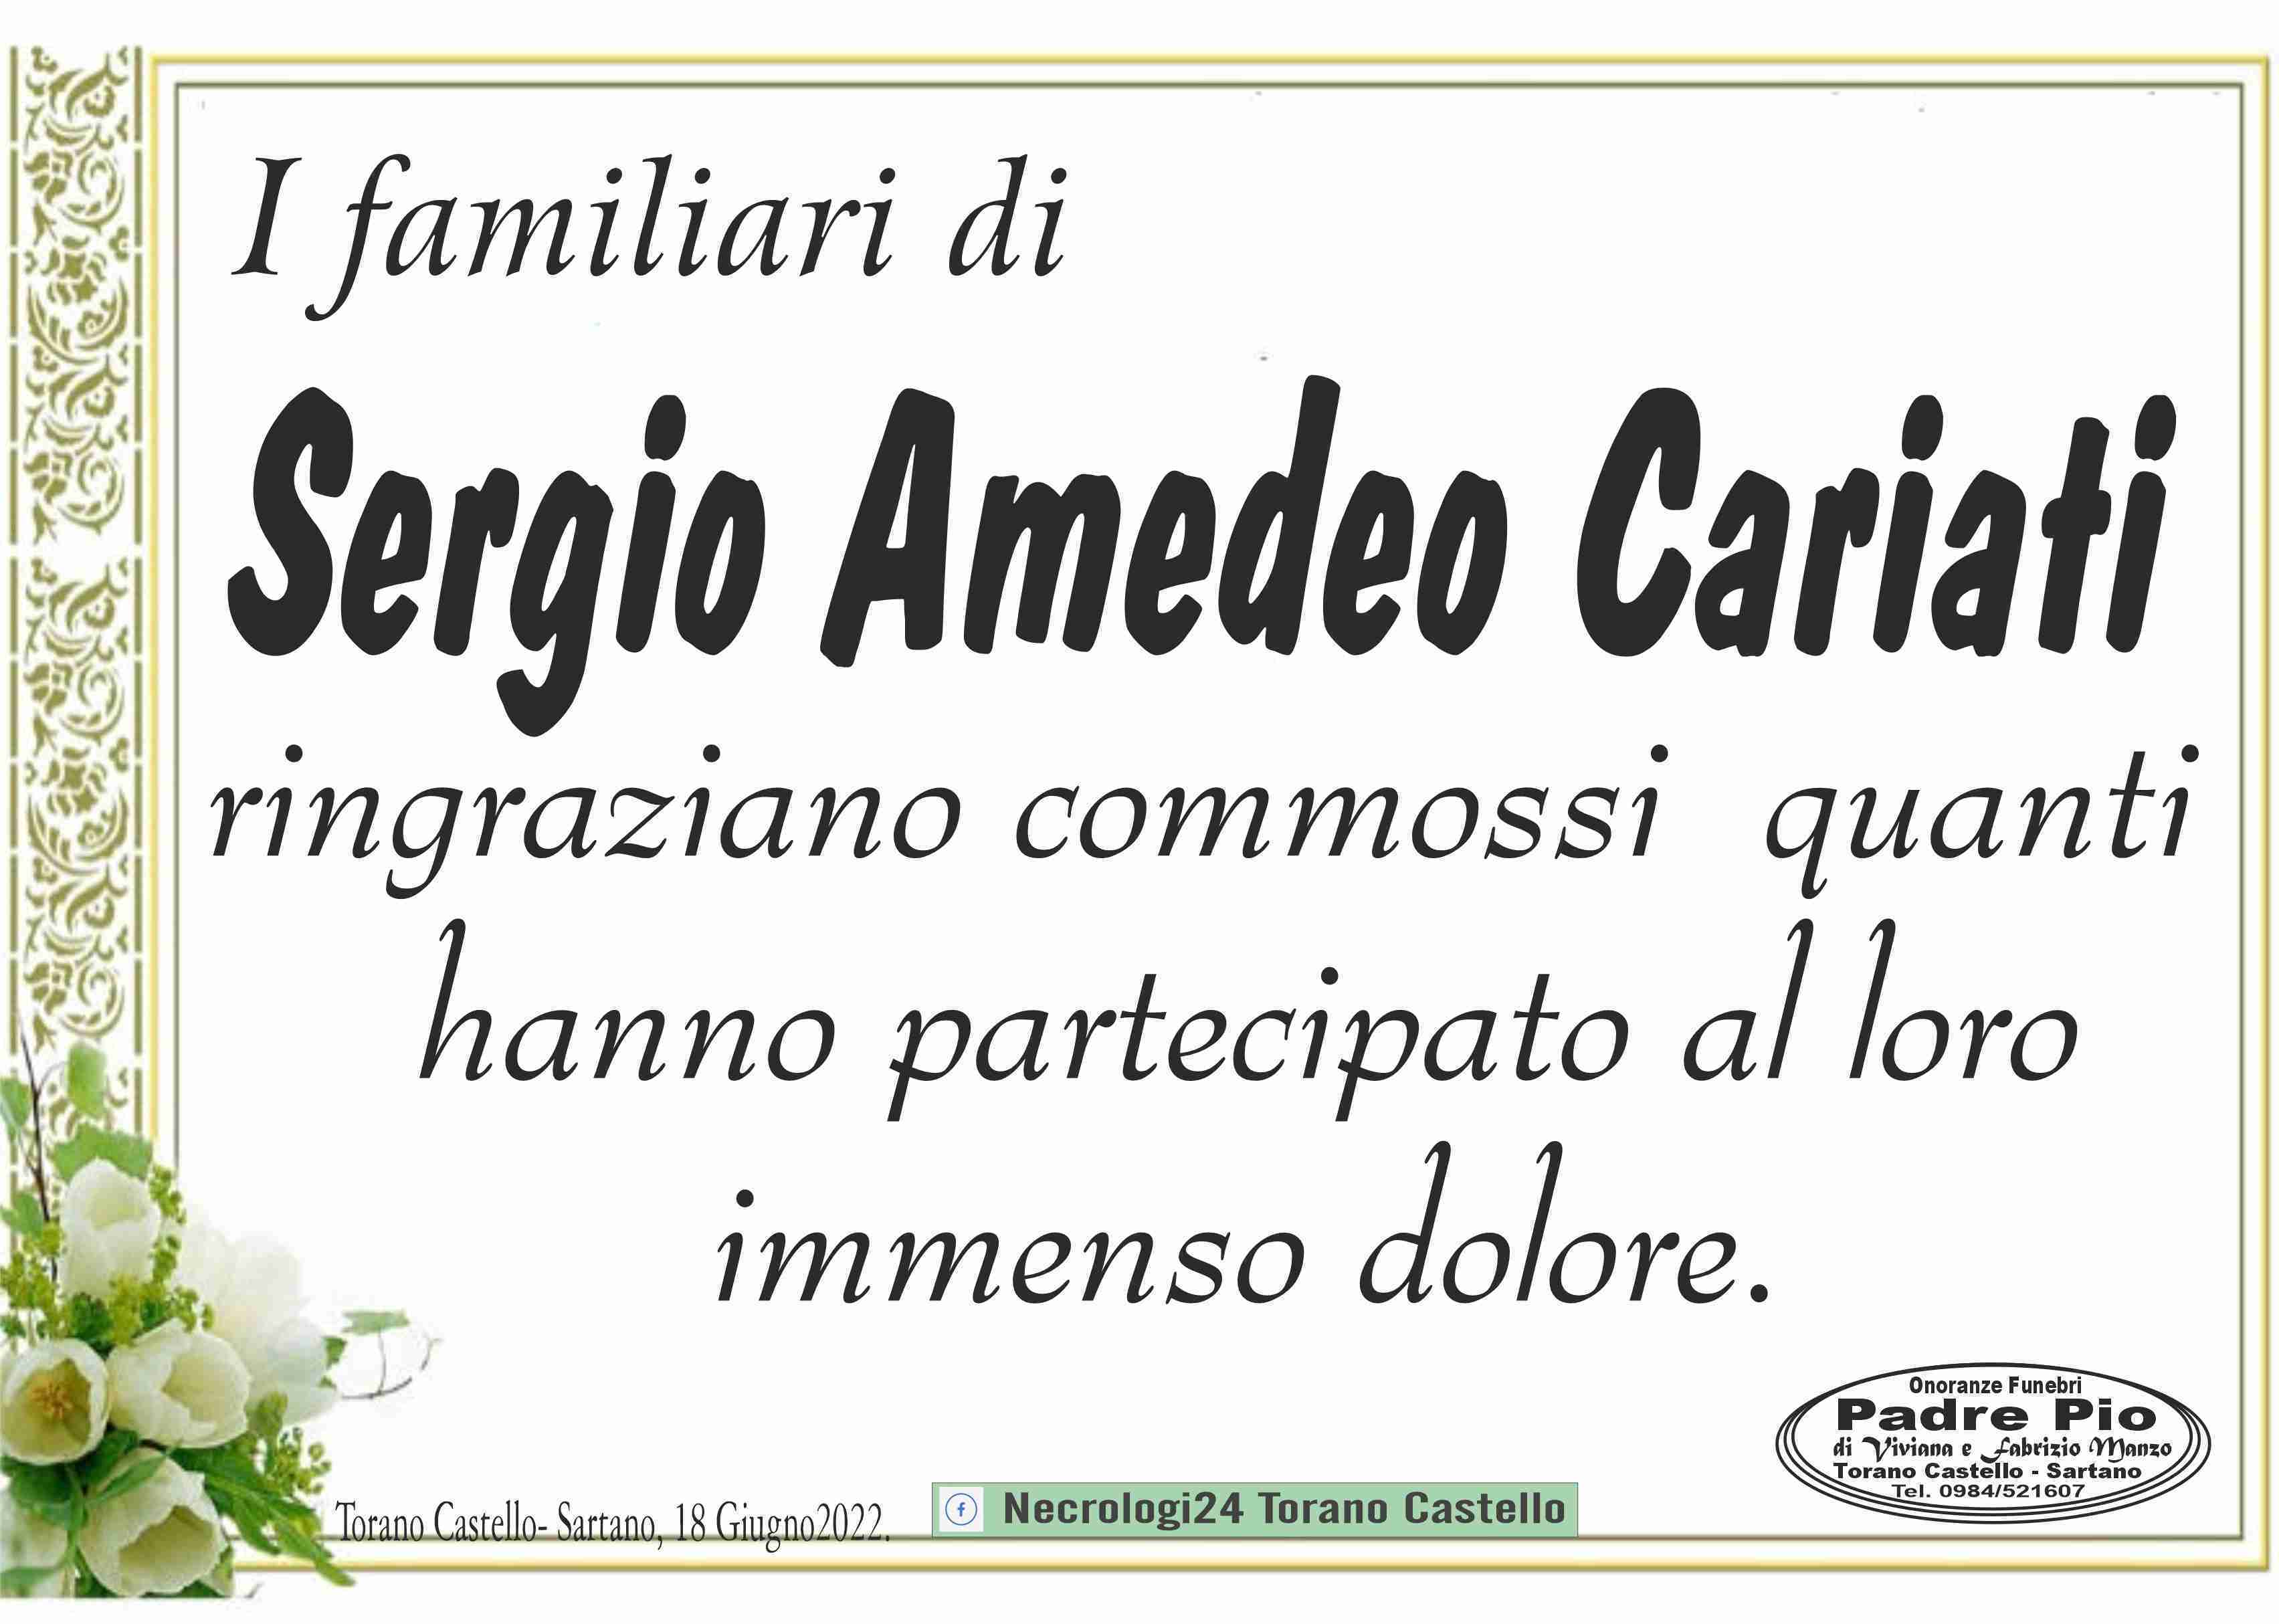 Sergio Amedeo Cariati